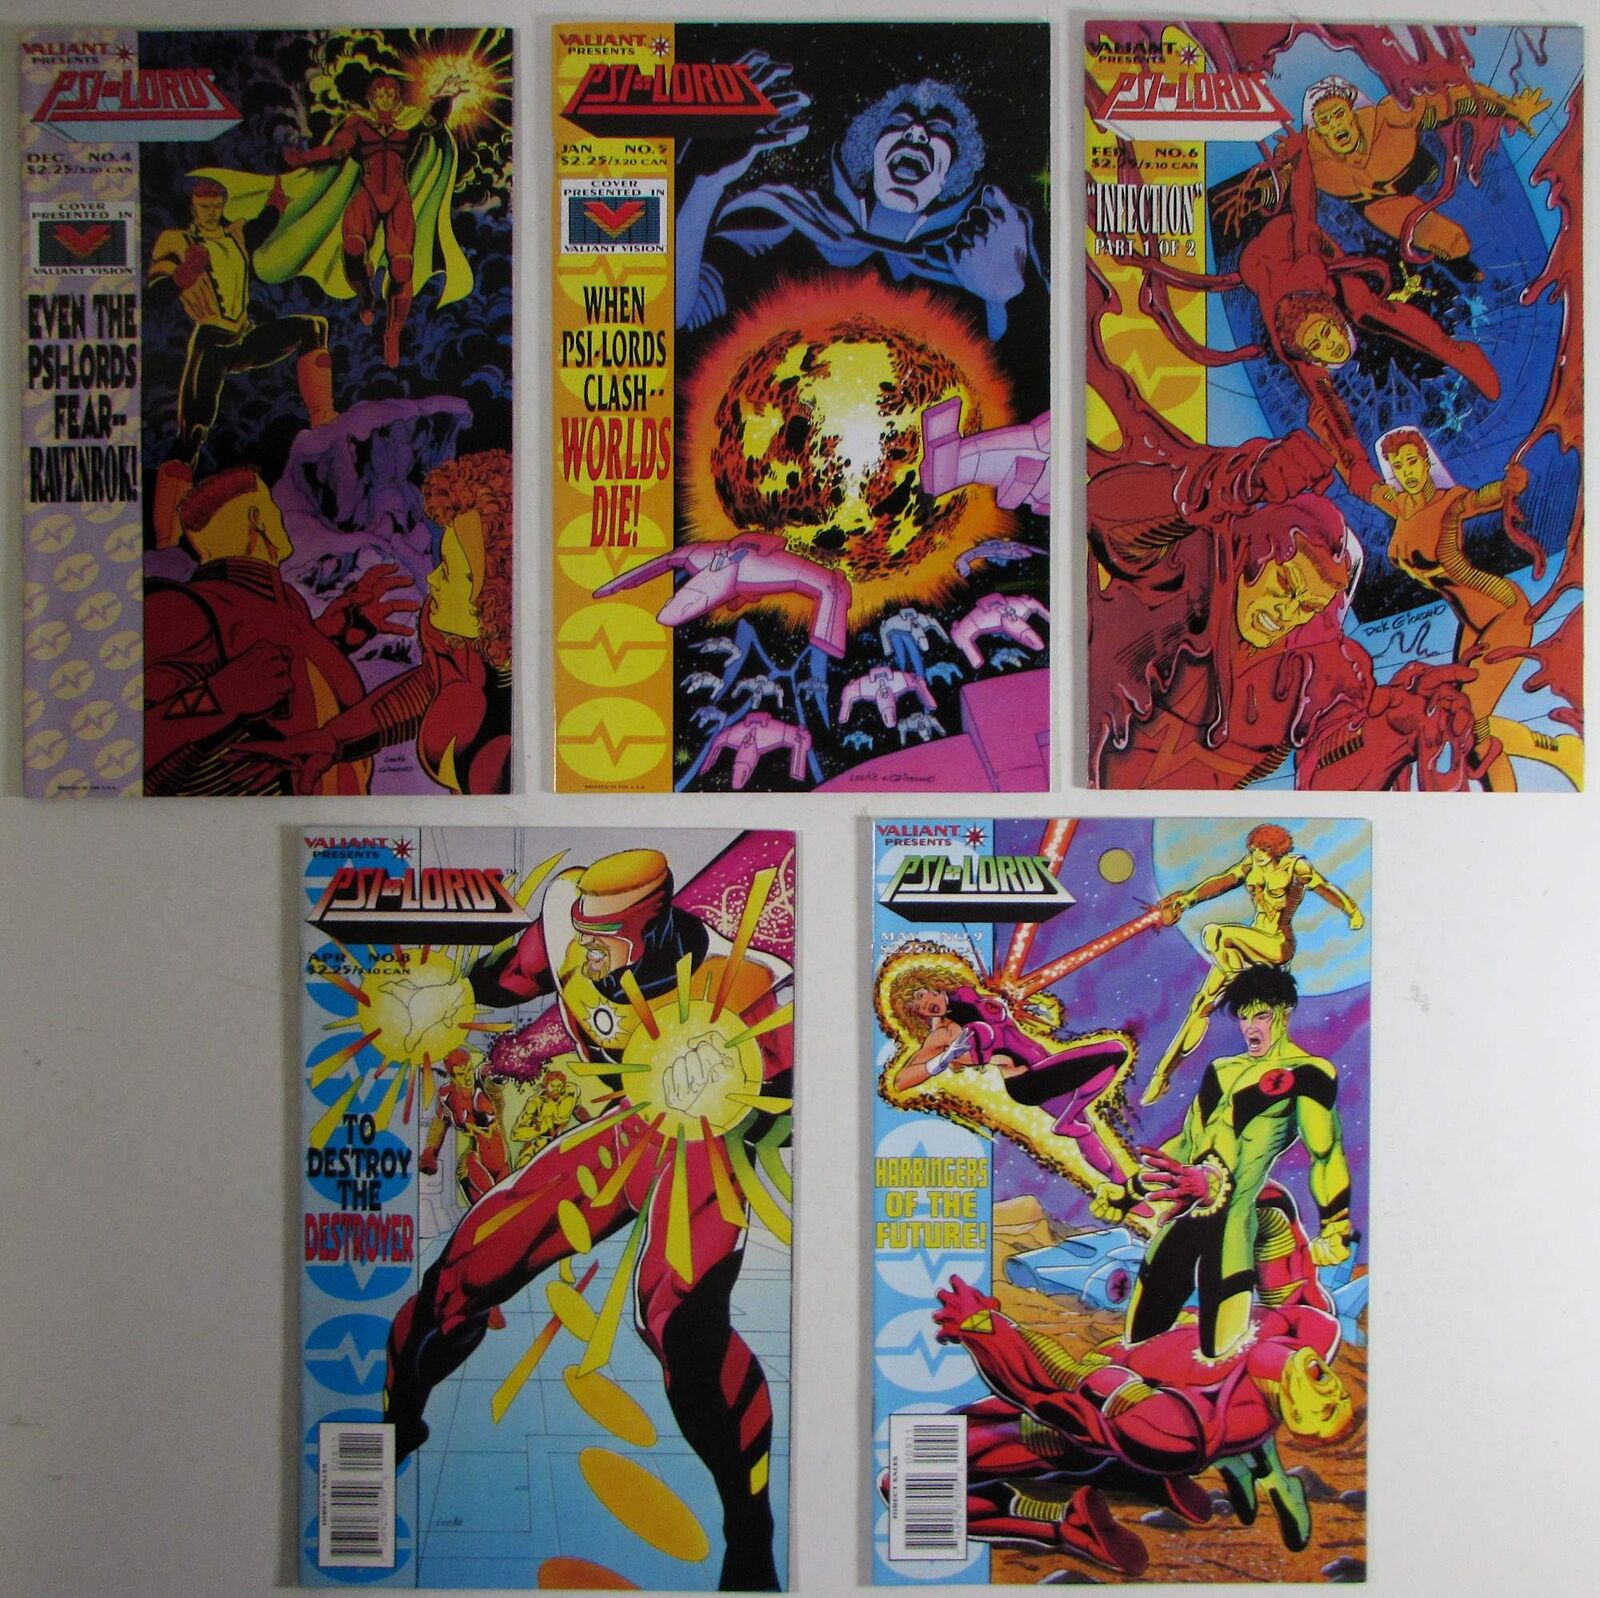 1994 PSI-Lords Lot of 5 #4,5,6,8,9 Valiant 1st Series Comic Books